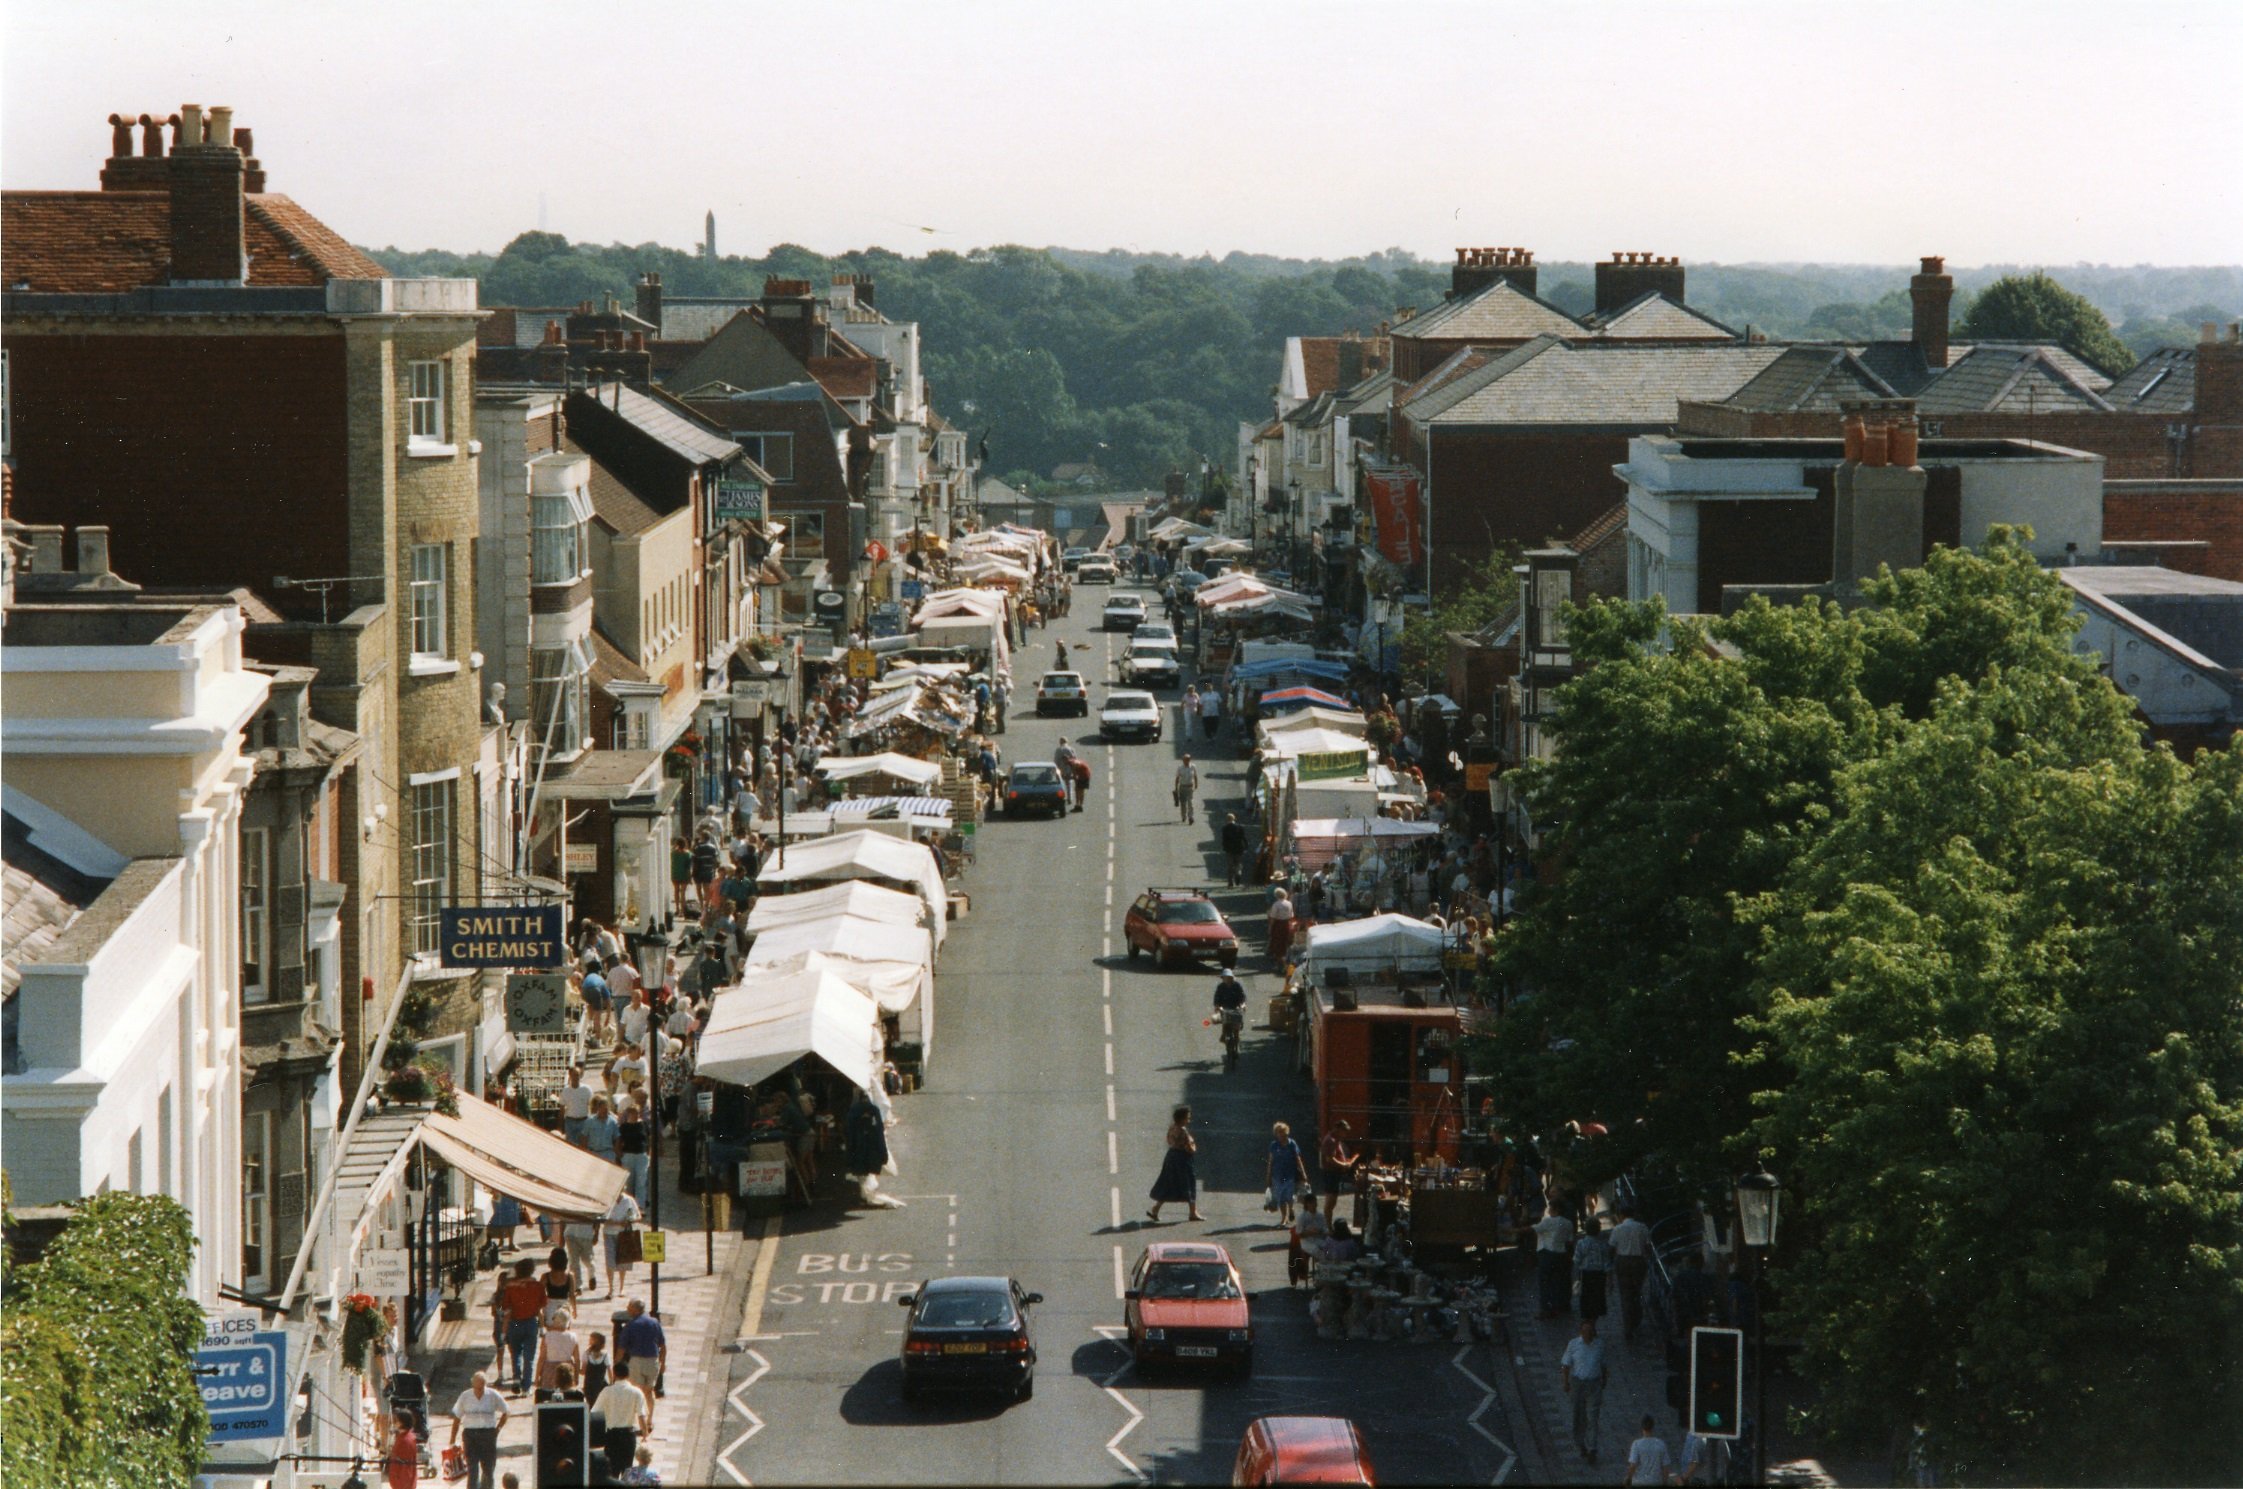 2006.52.2 Lymington High Street with market c.1990.jpg